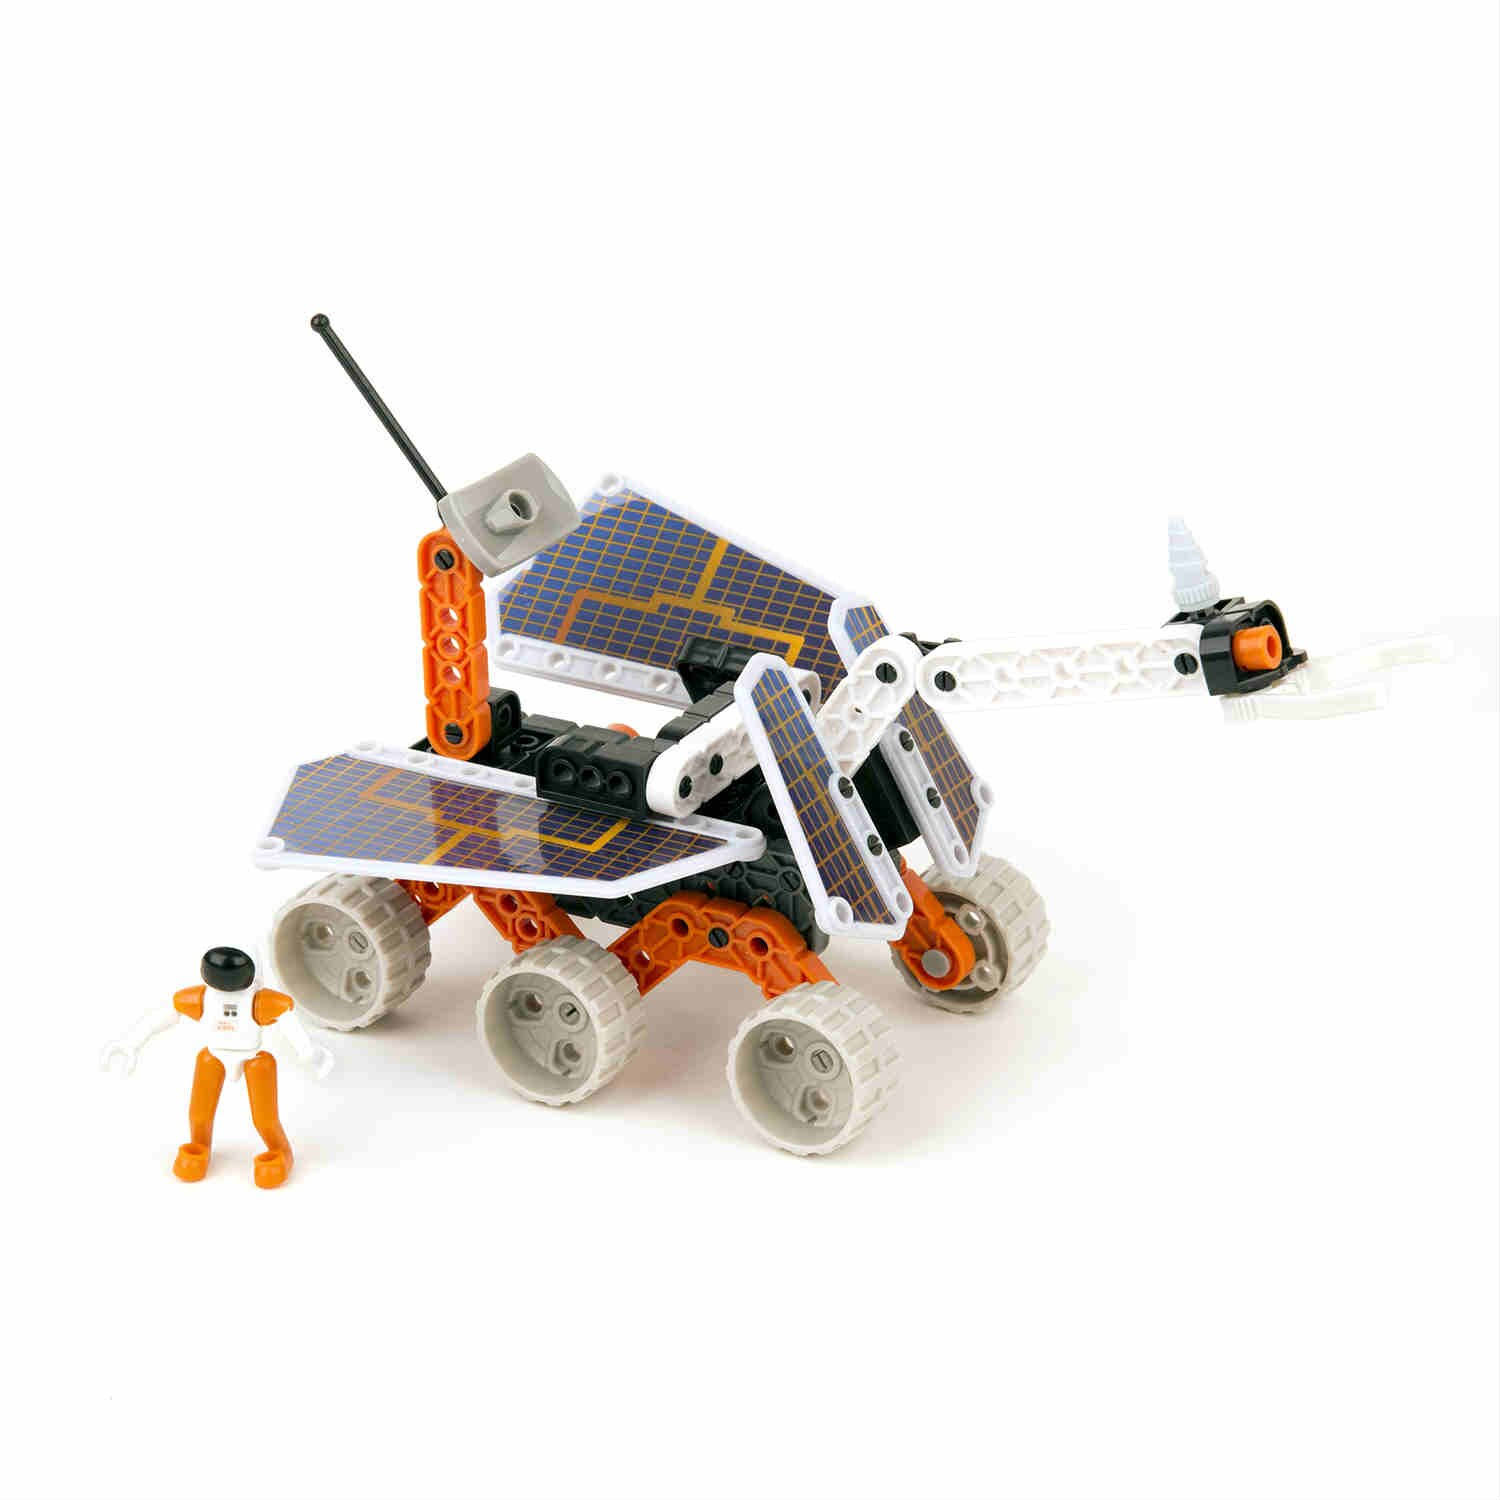 Hexbug Vex Robotics Explorers Rover Construction Kit